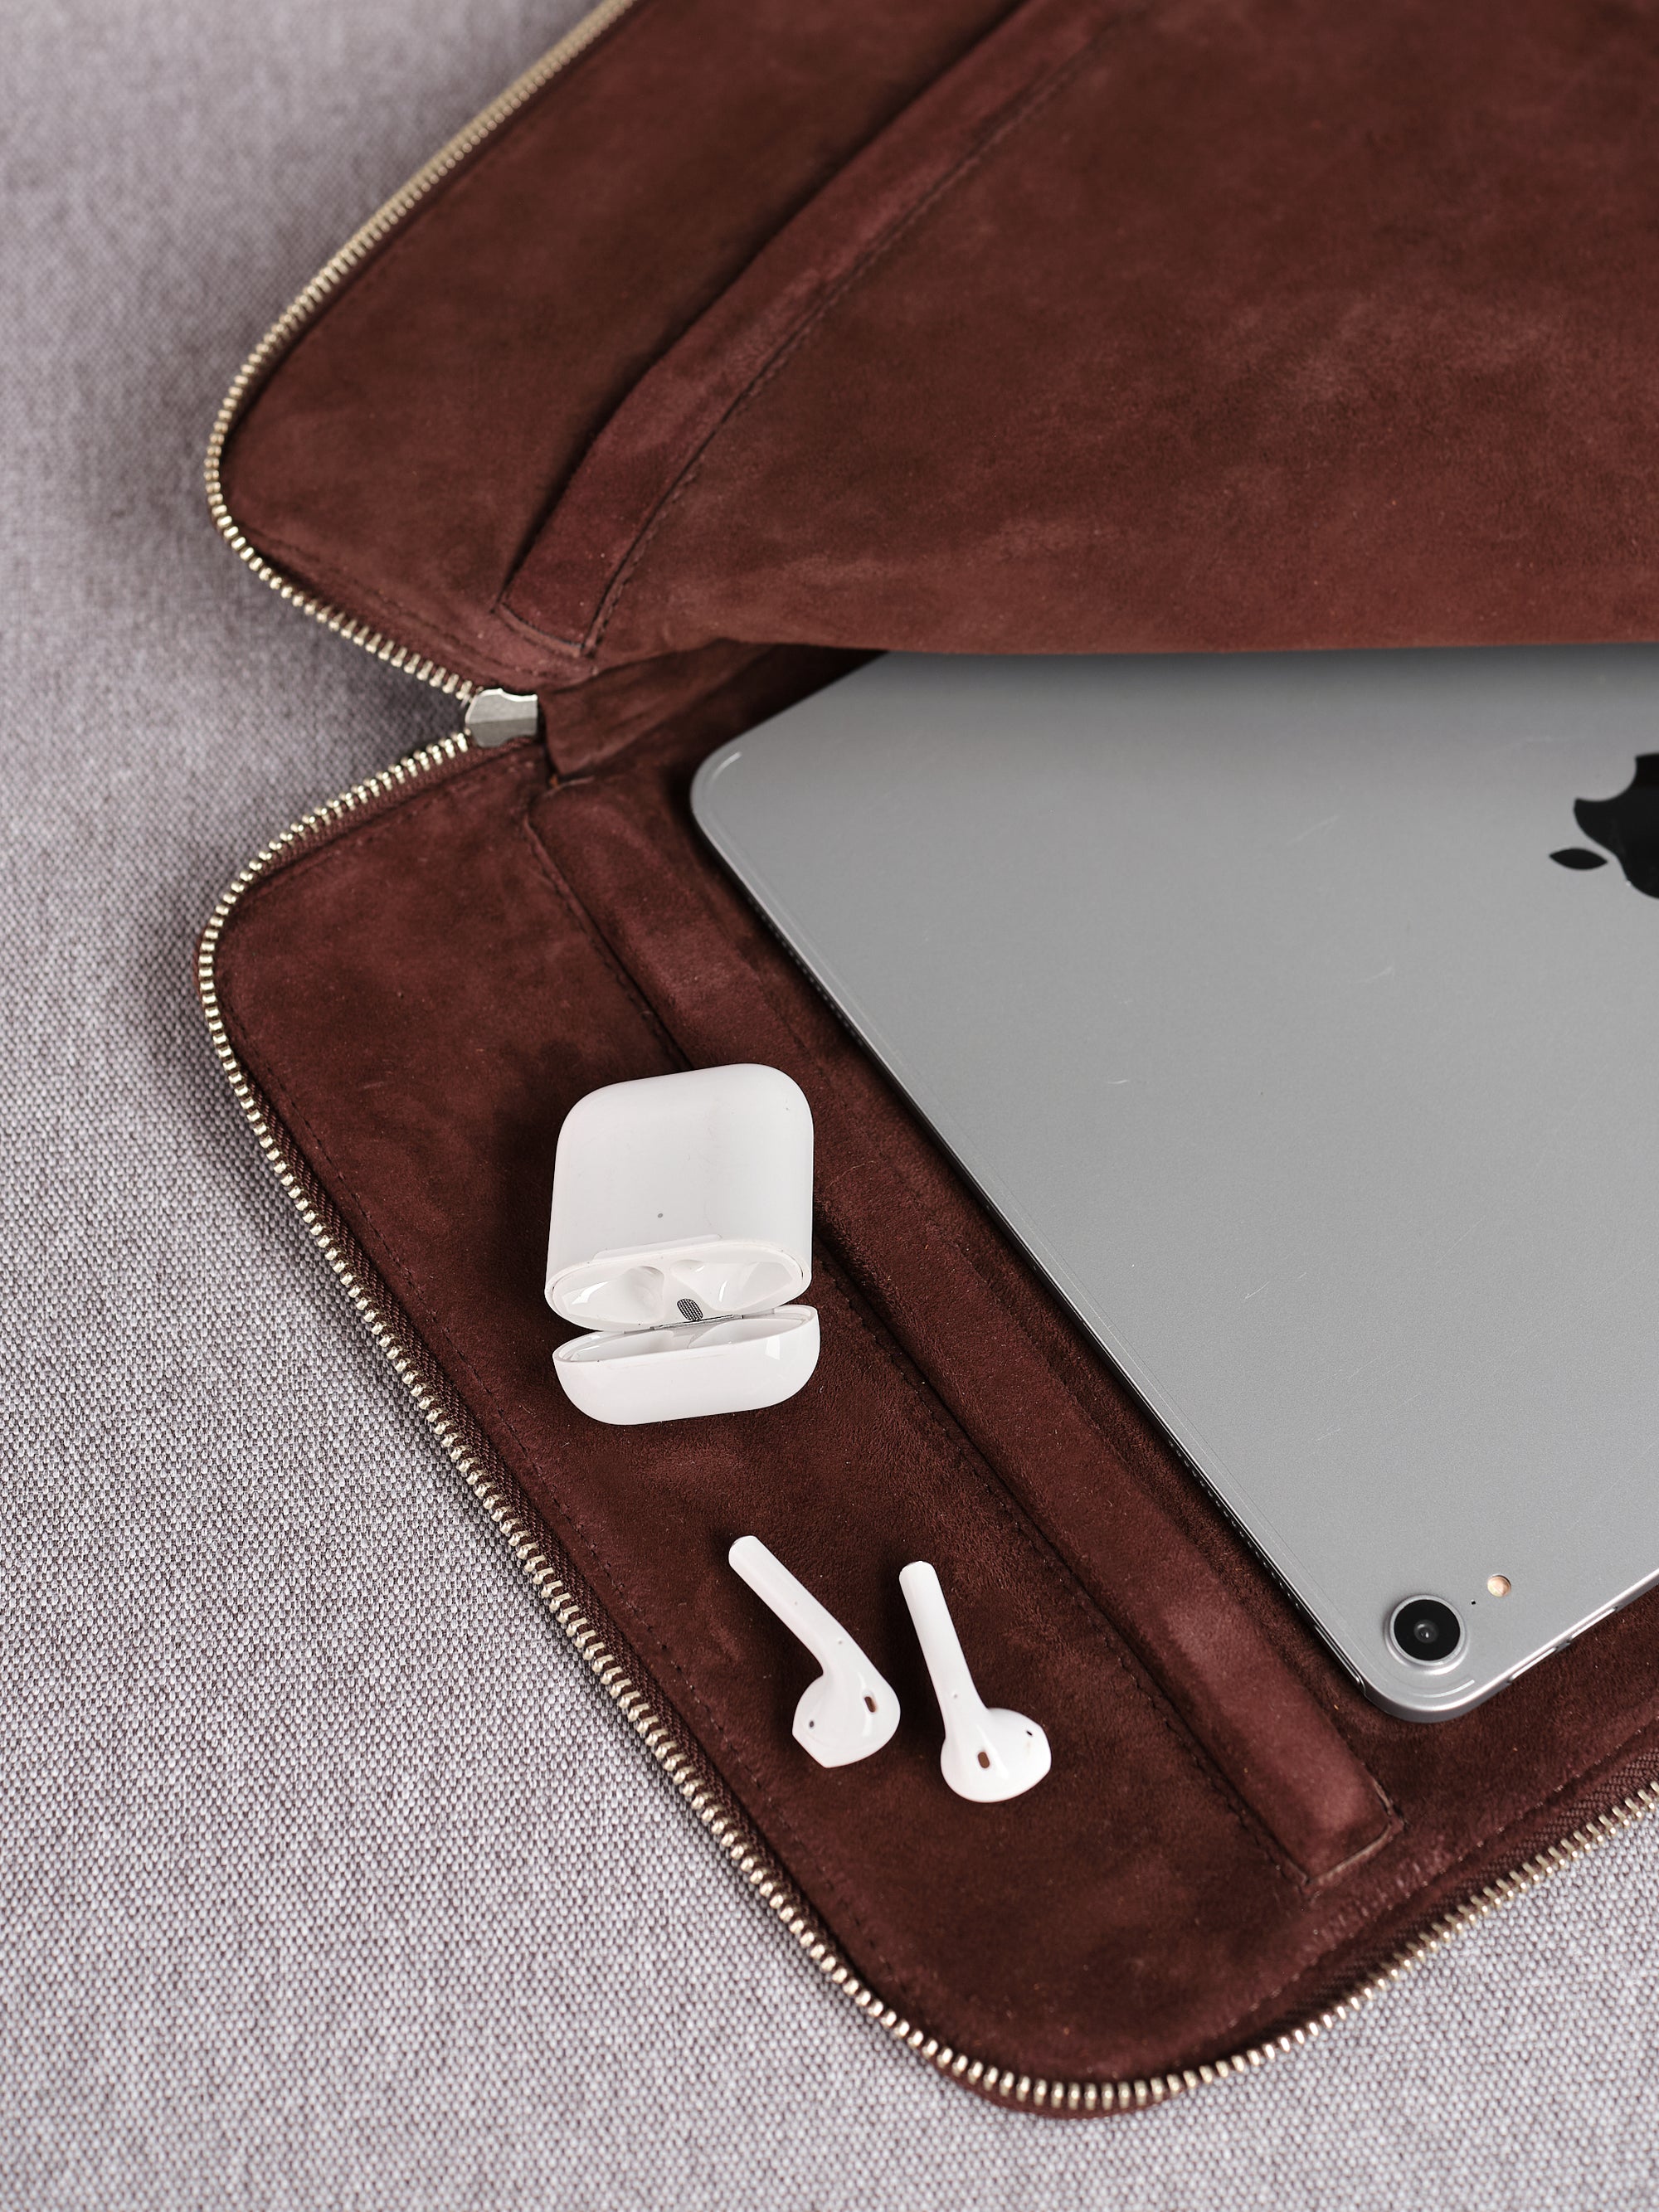 Suede interior. Draftsman 6 iPad Pro Case iPad Pro 11-inch, iPad Pro 12.9 by Capra Leather